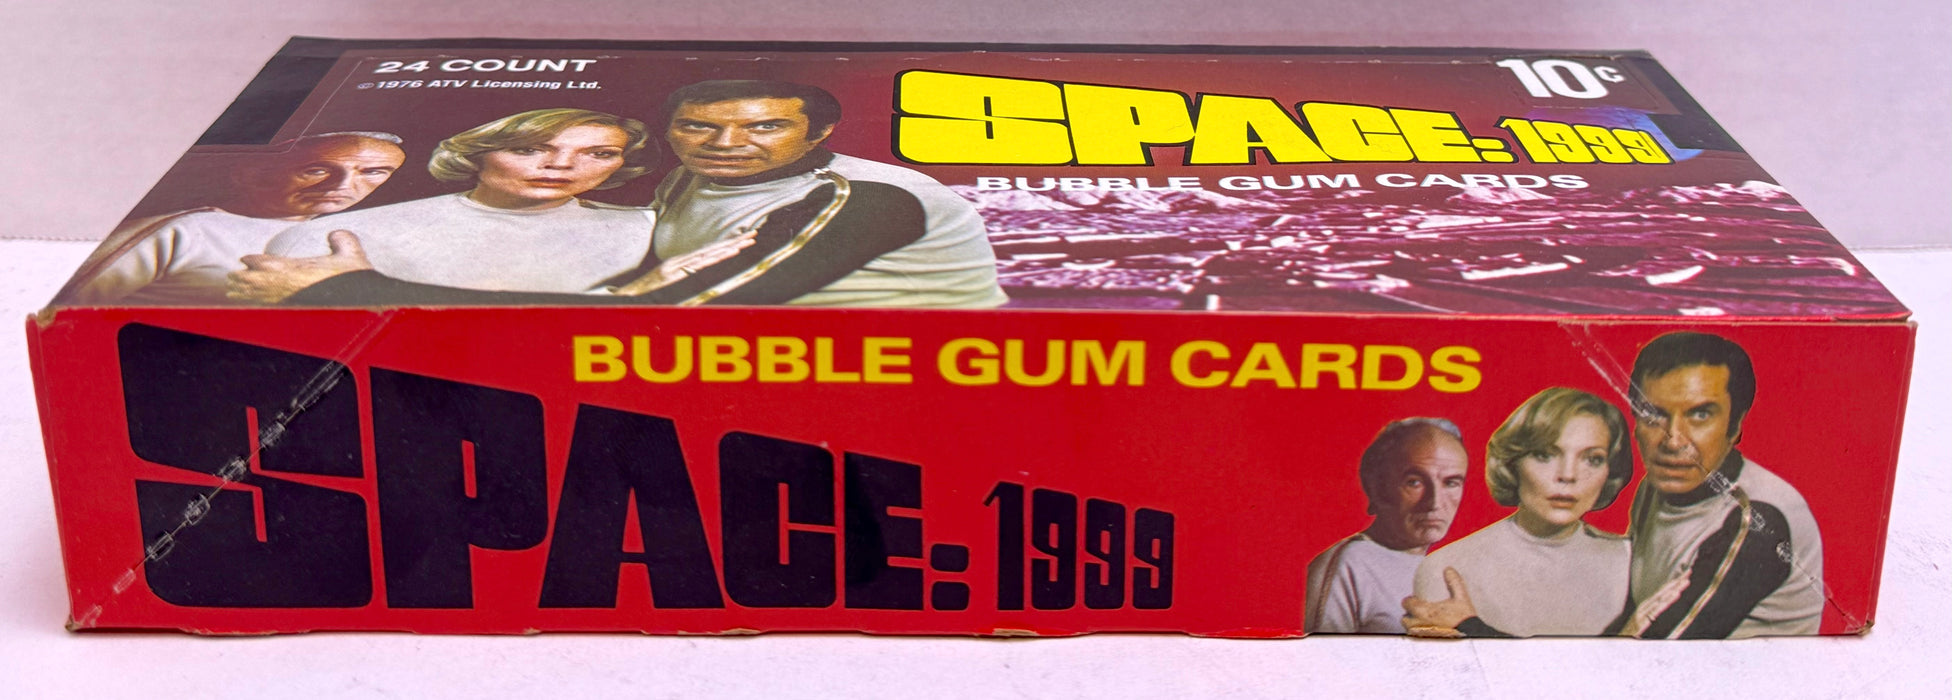 Space 1999 Vintage Bubble Gum Card Box 24 Packs FULL Donruss 1976   - TvMovieCards.com